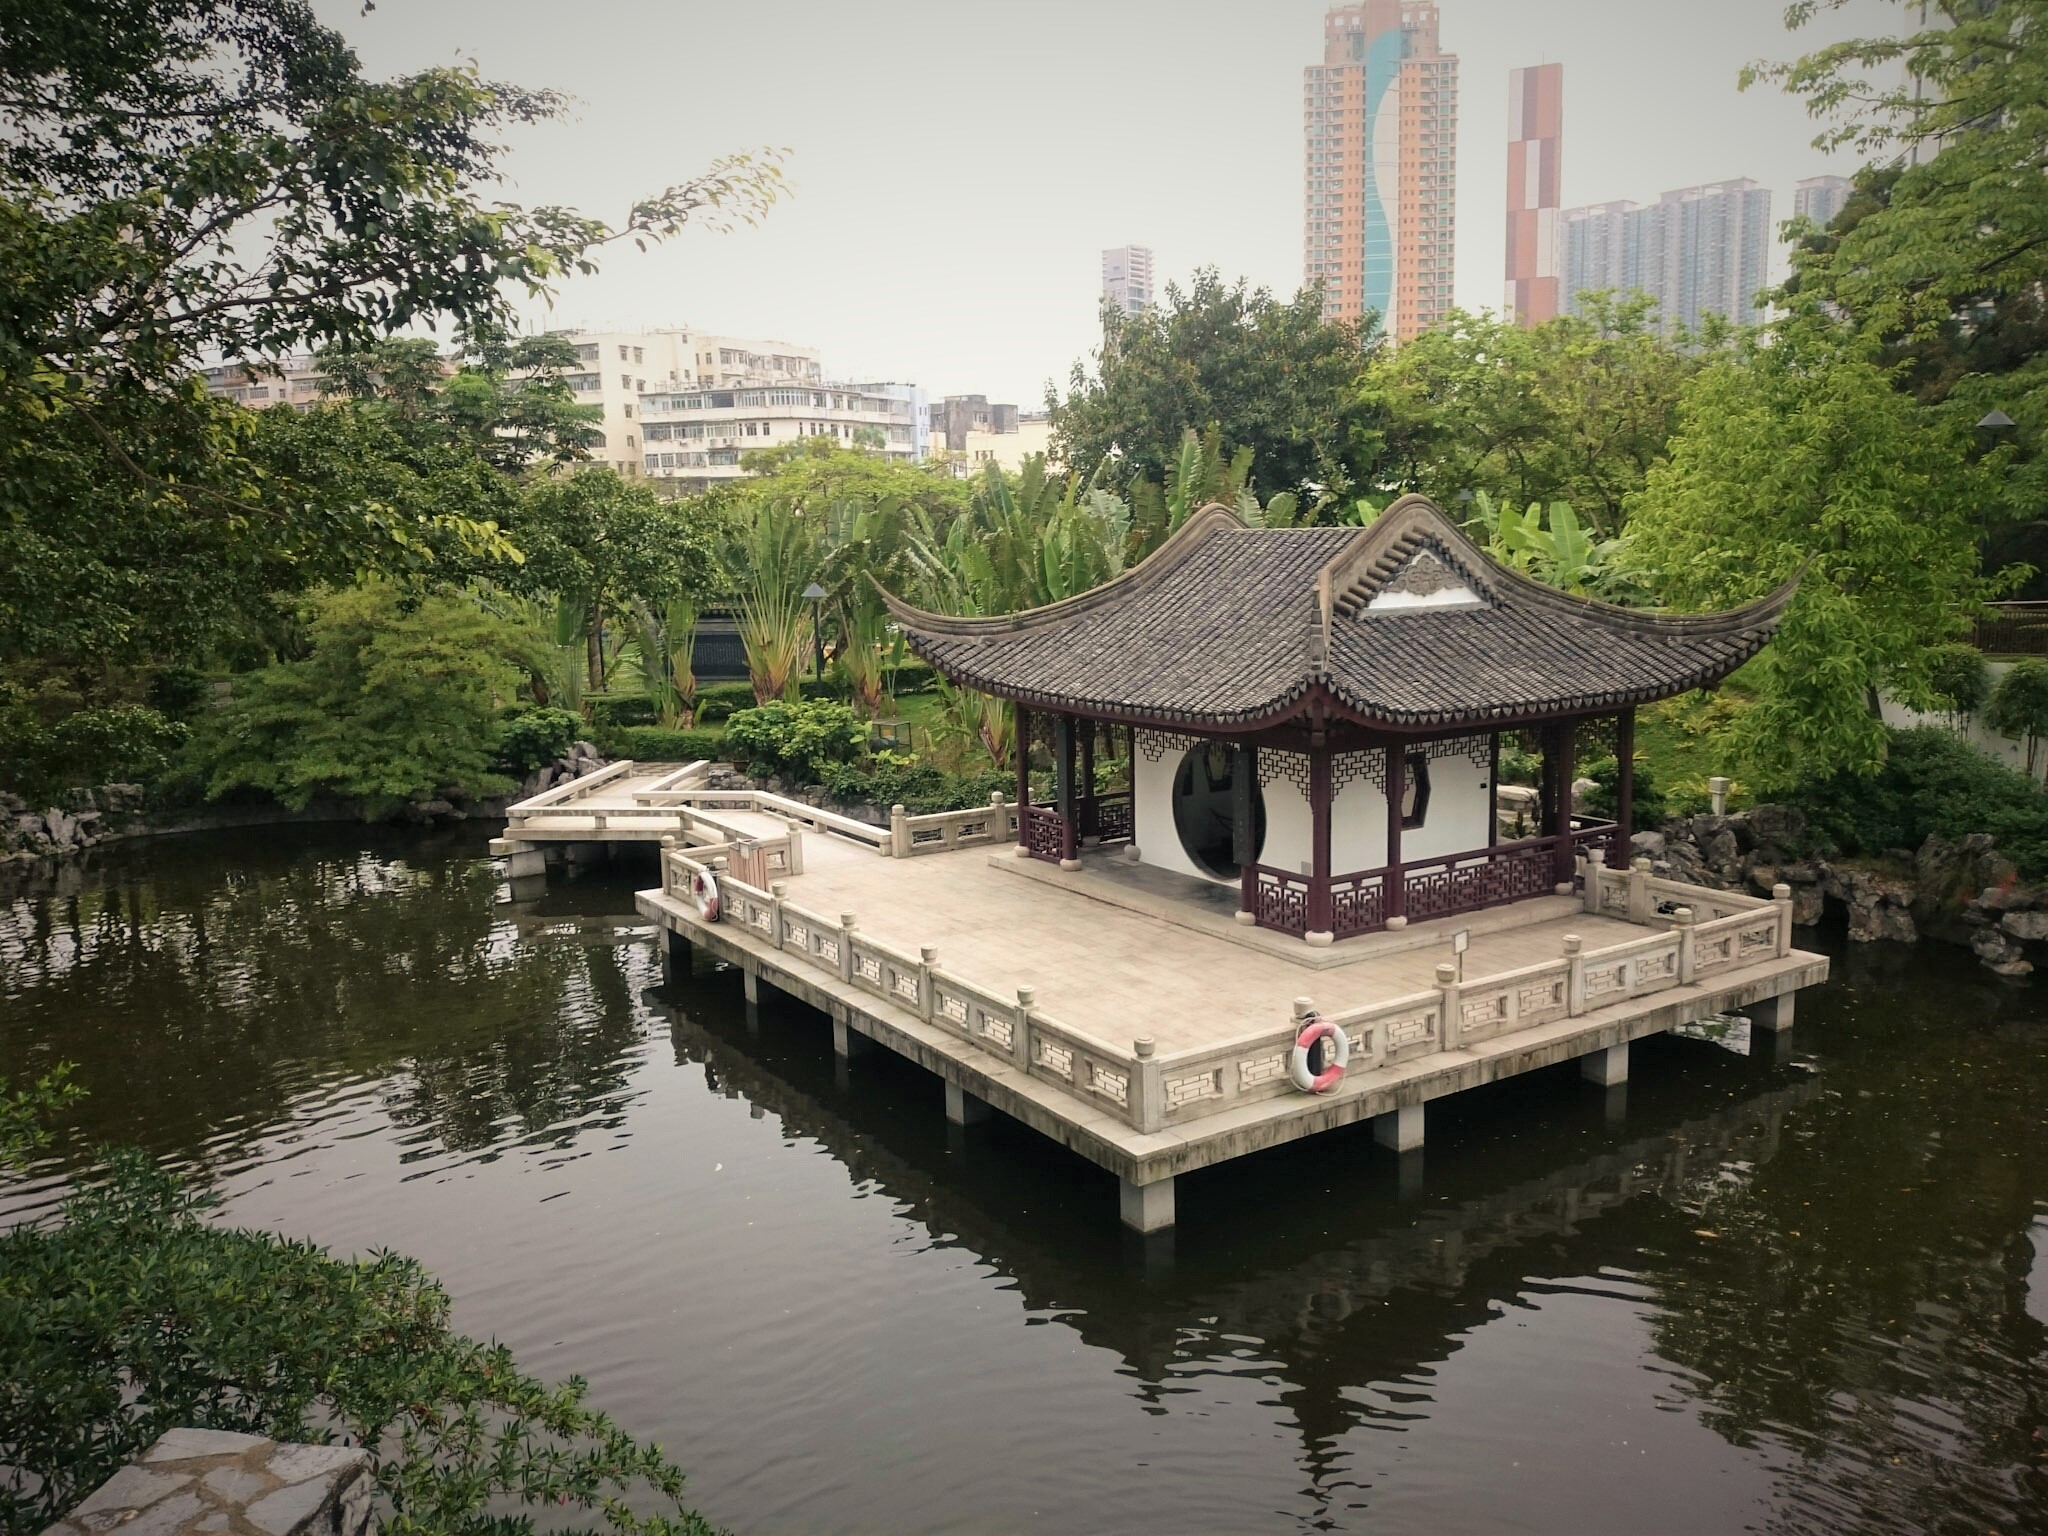 Kowloon walled city park